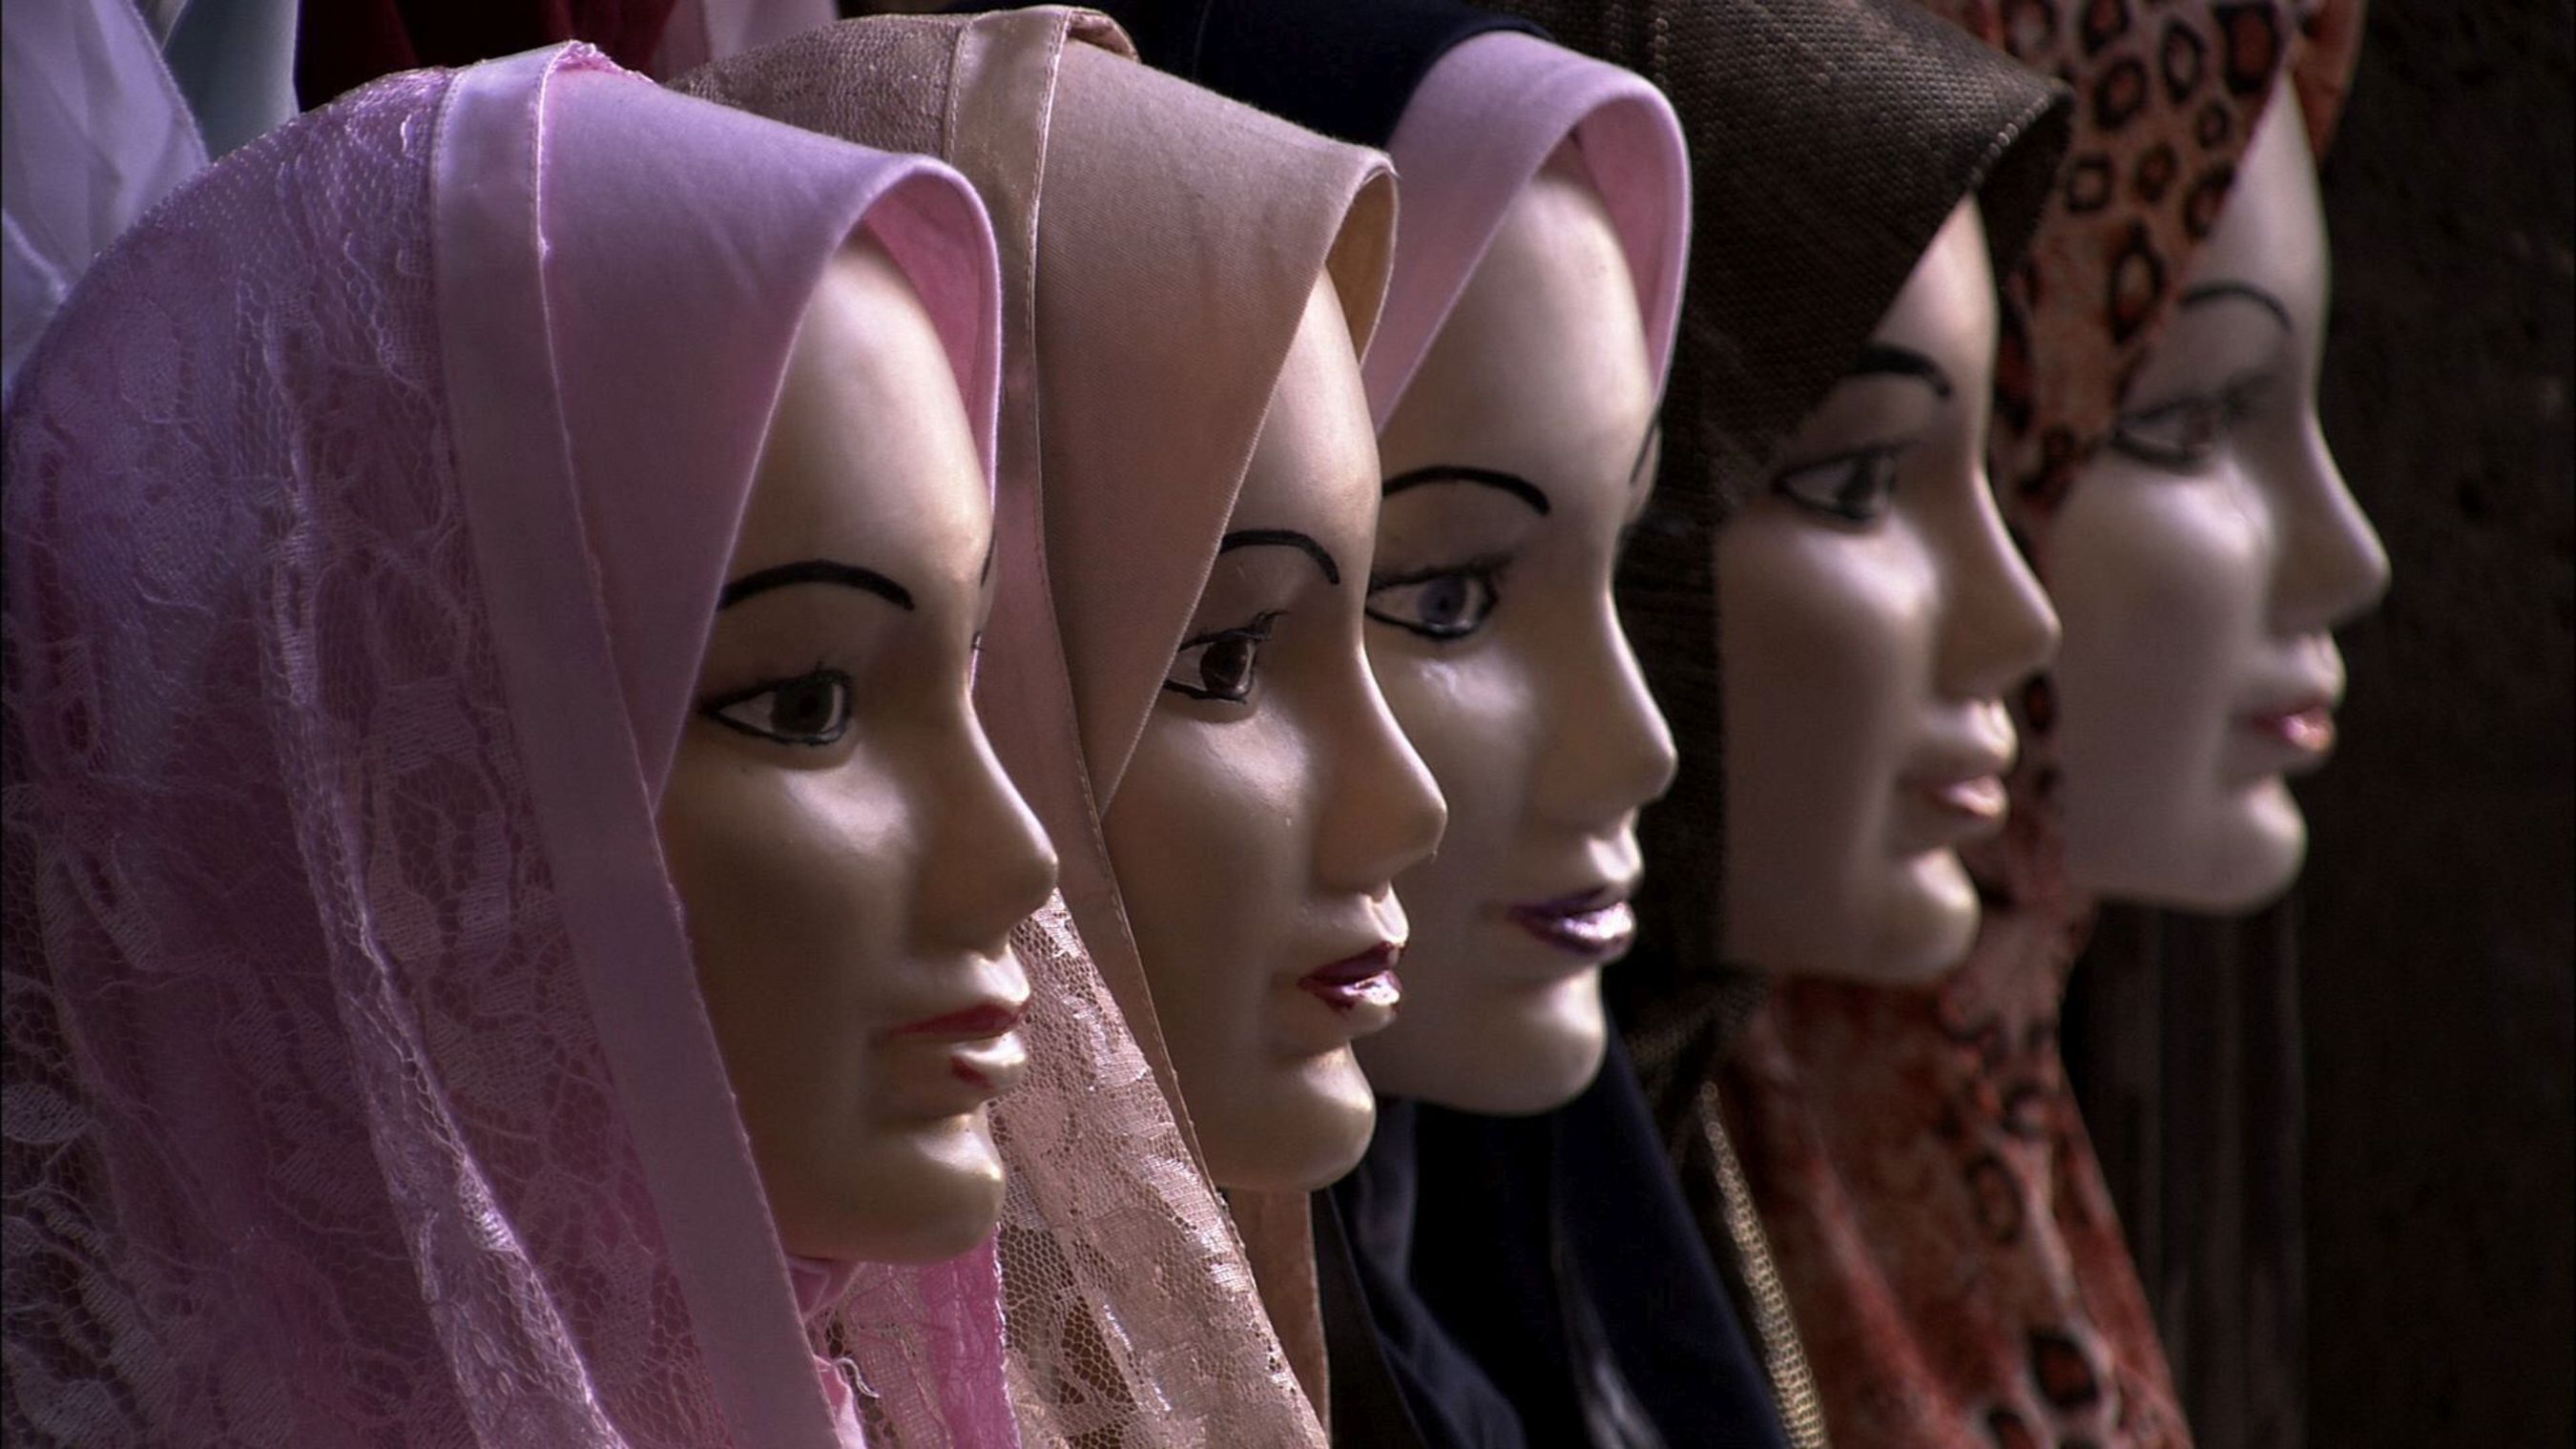 Mannequins with hijabs on. (PRNewsFoto/Pyramedia)